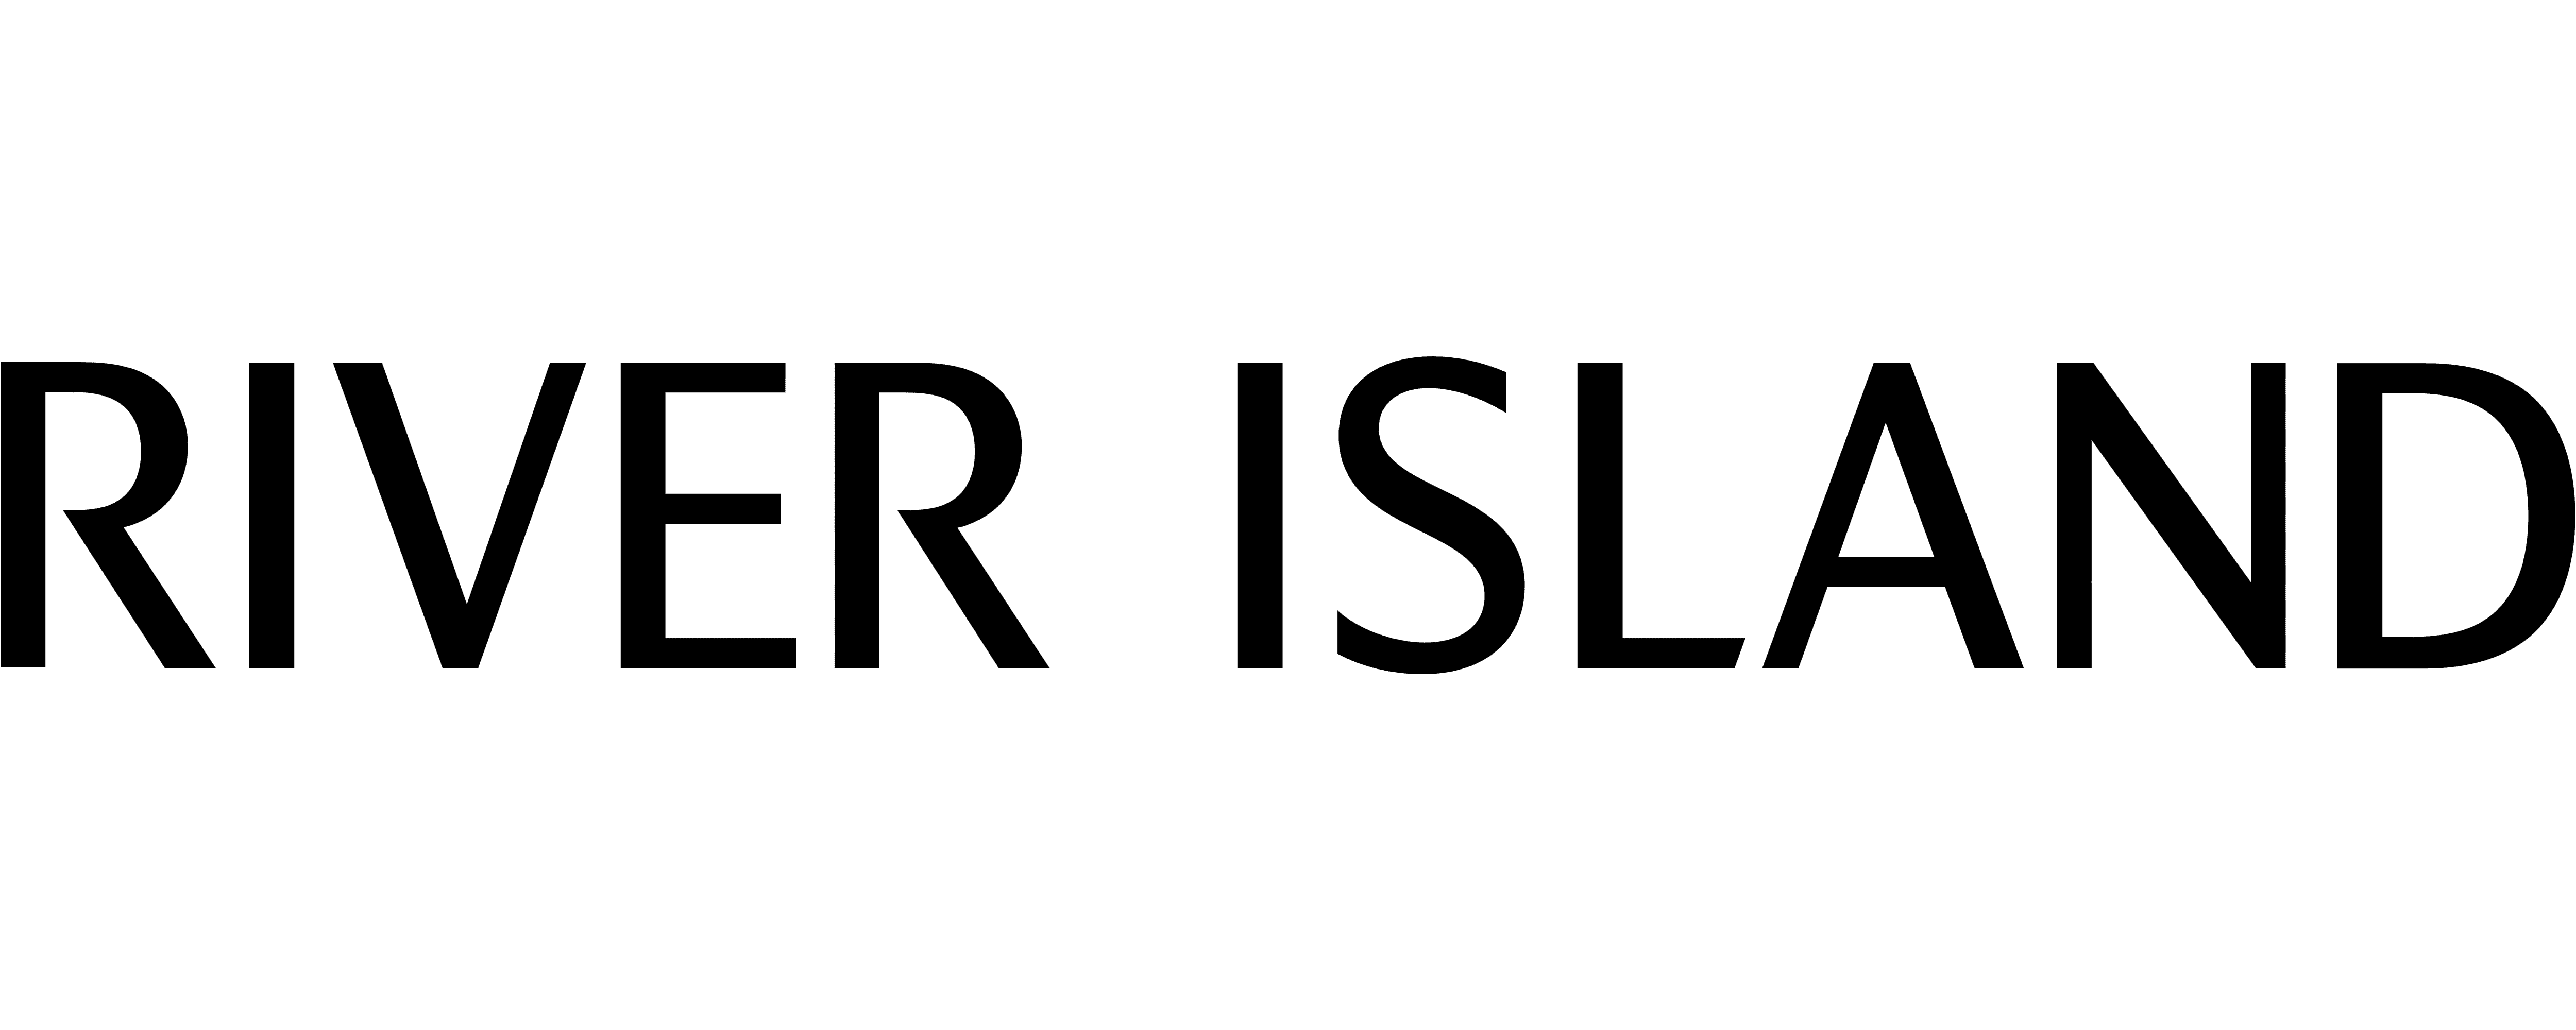 River Island - PeaceinPalestine